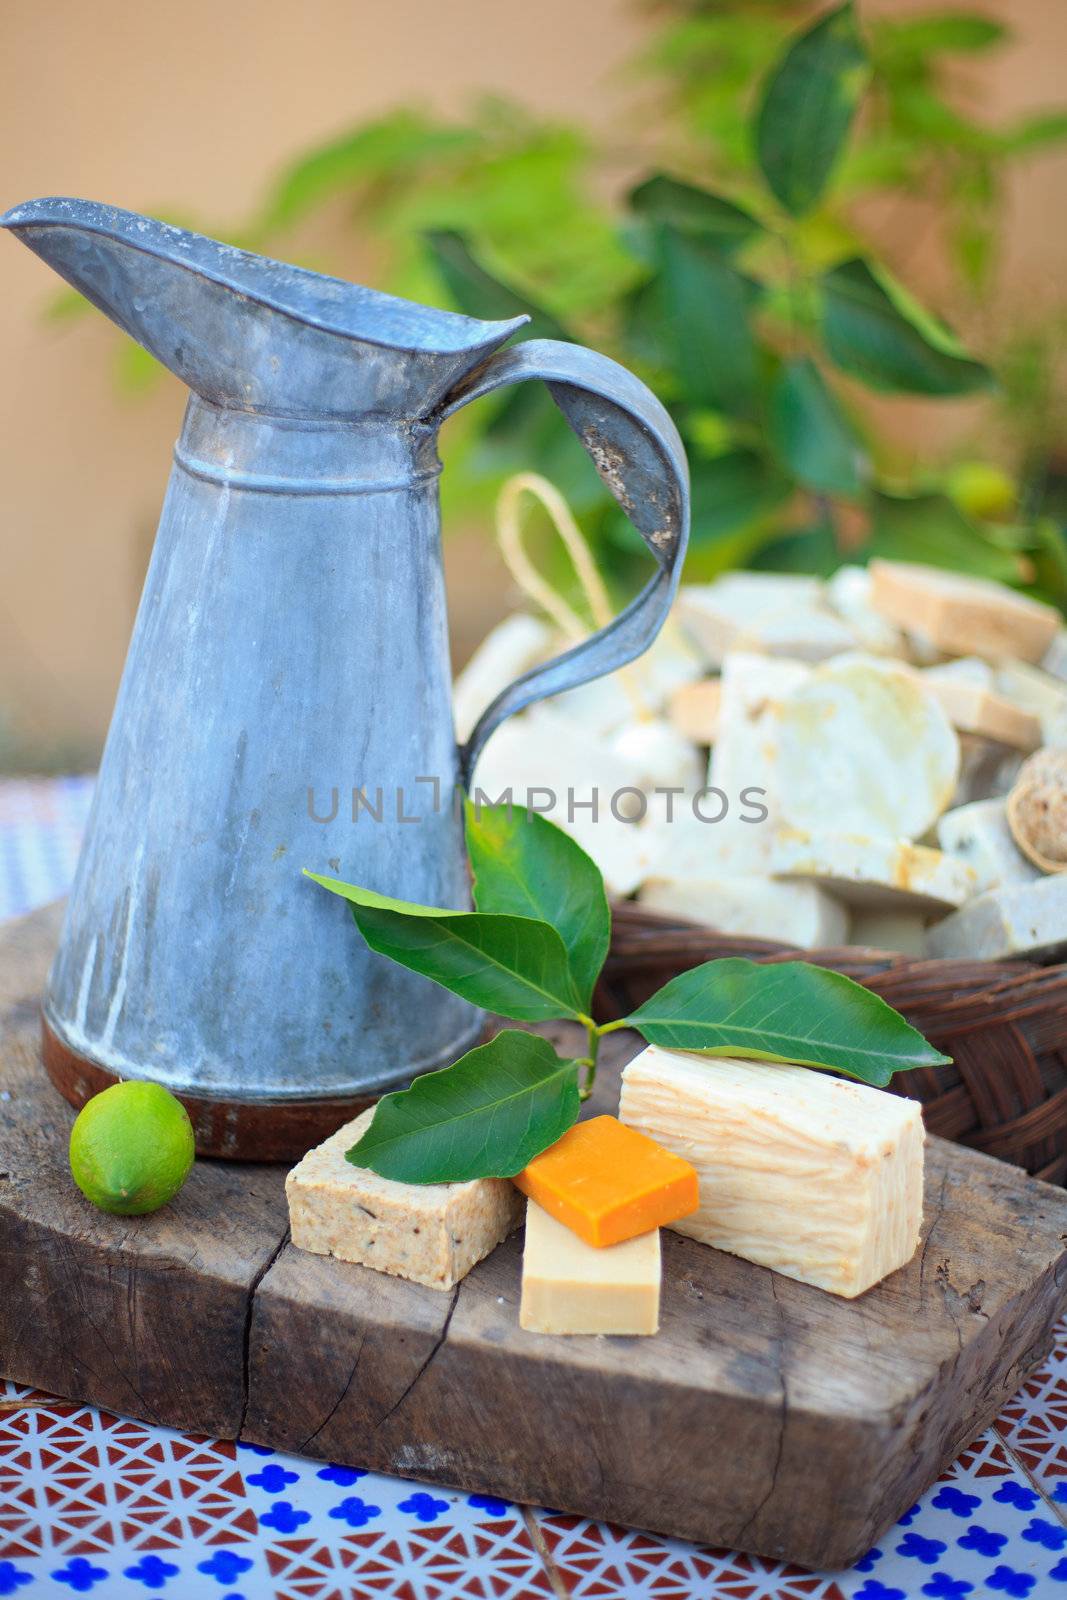 Photo of natural Homemade soaps